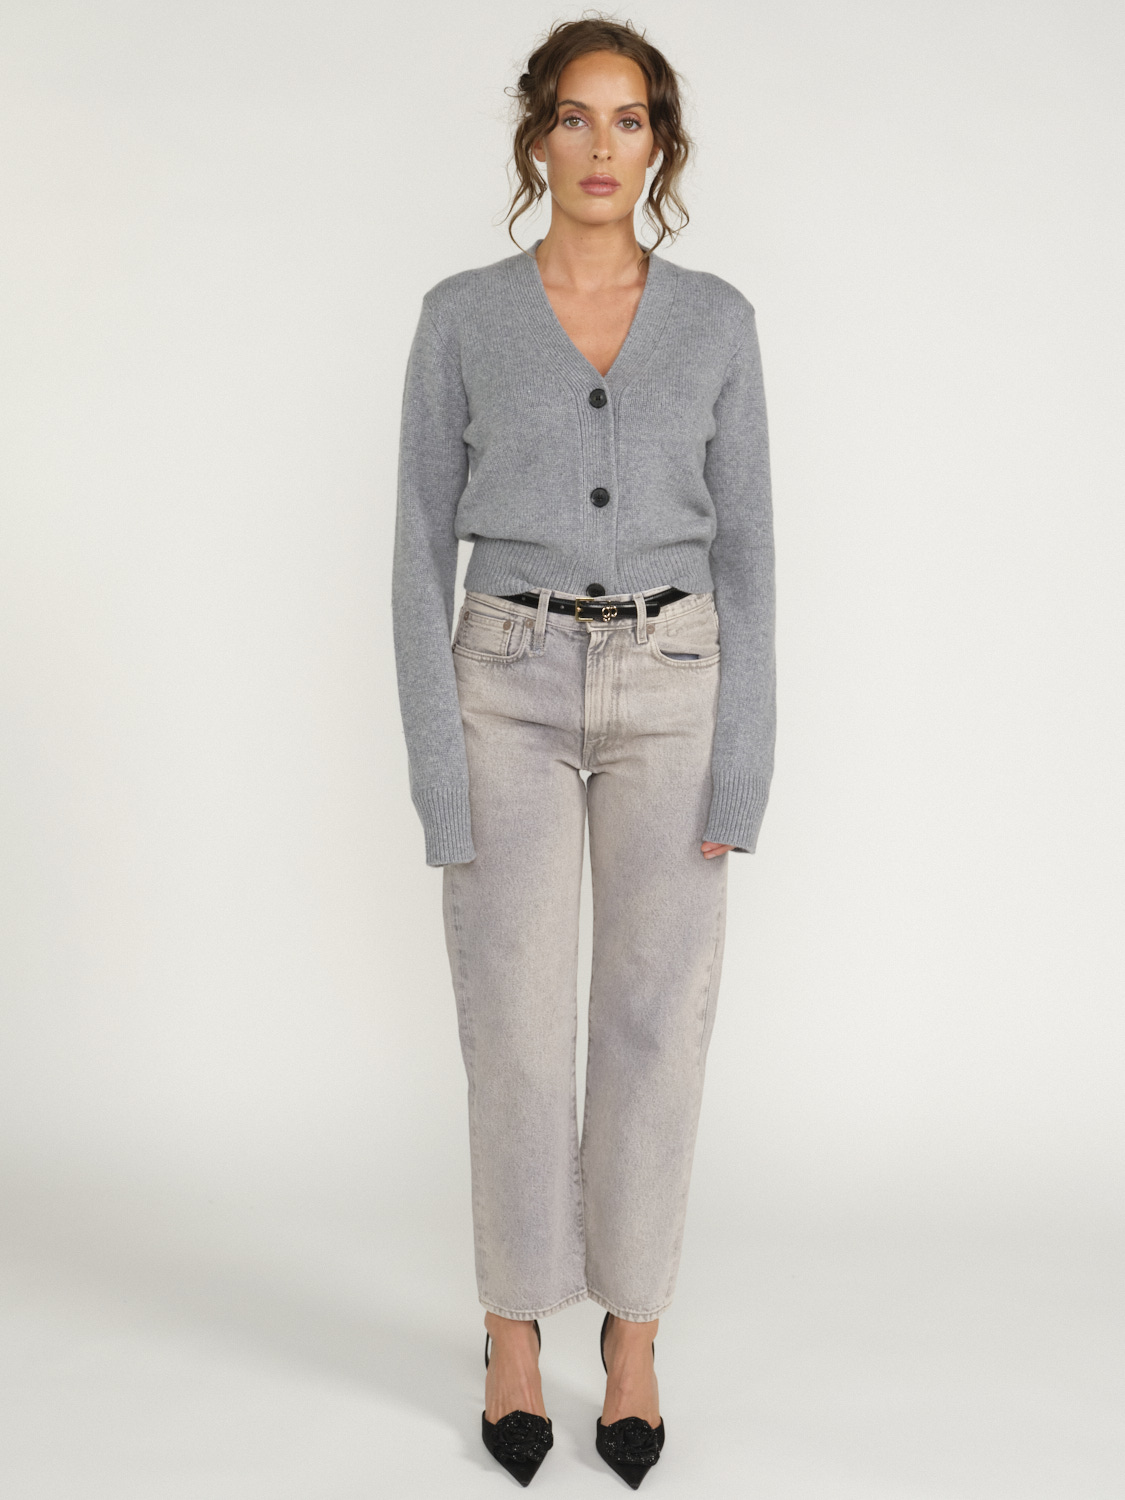 Nili Lotan Caldorf Sweater - Cardigan with button facing in cashmere grey S